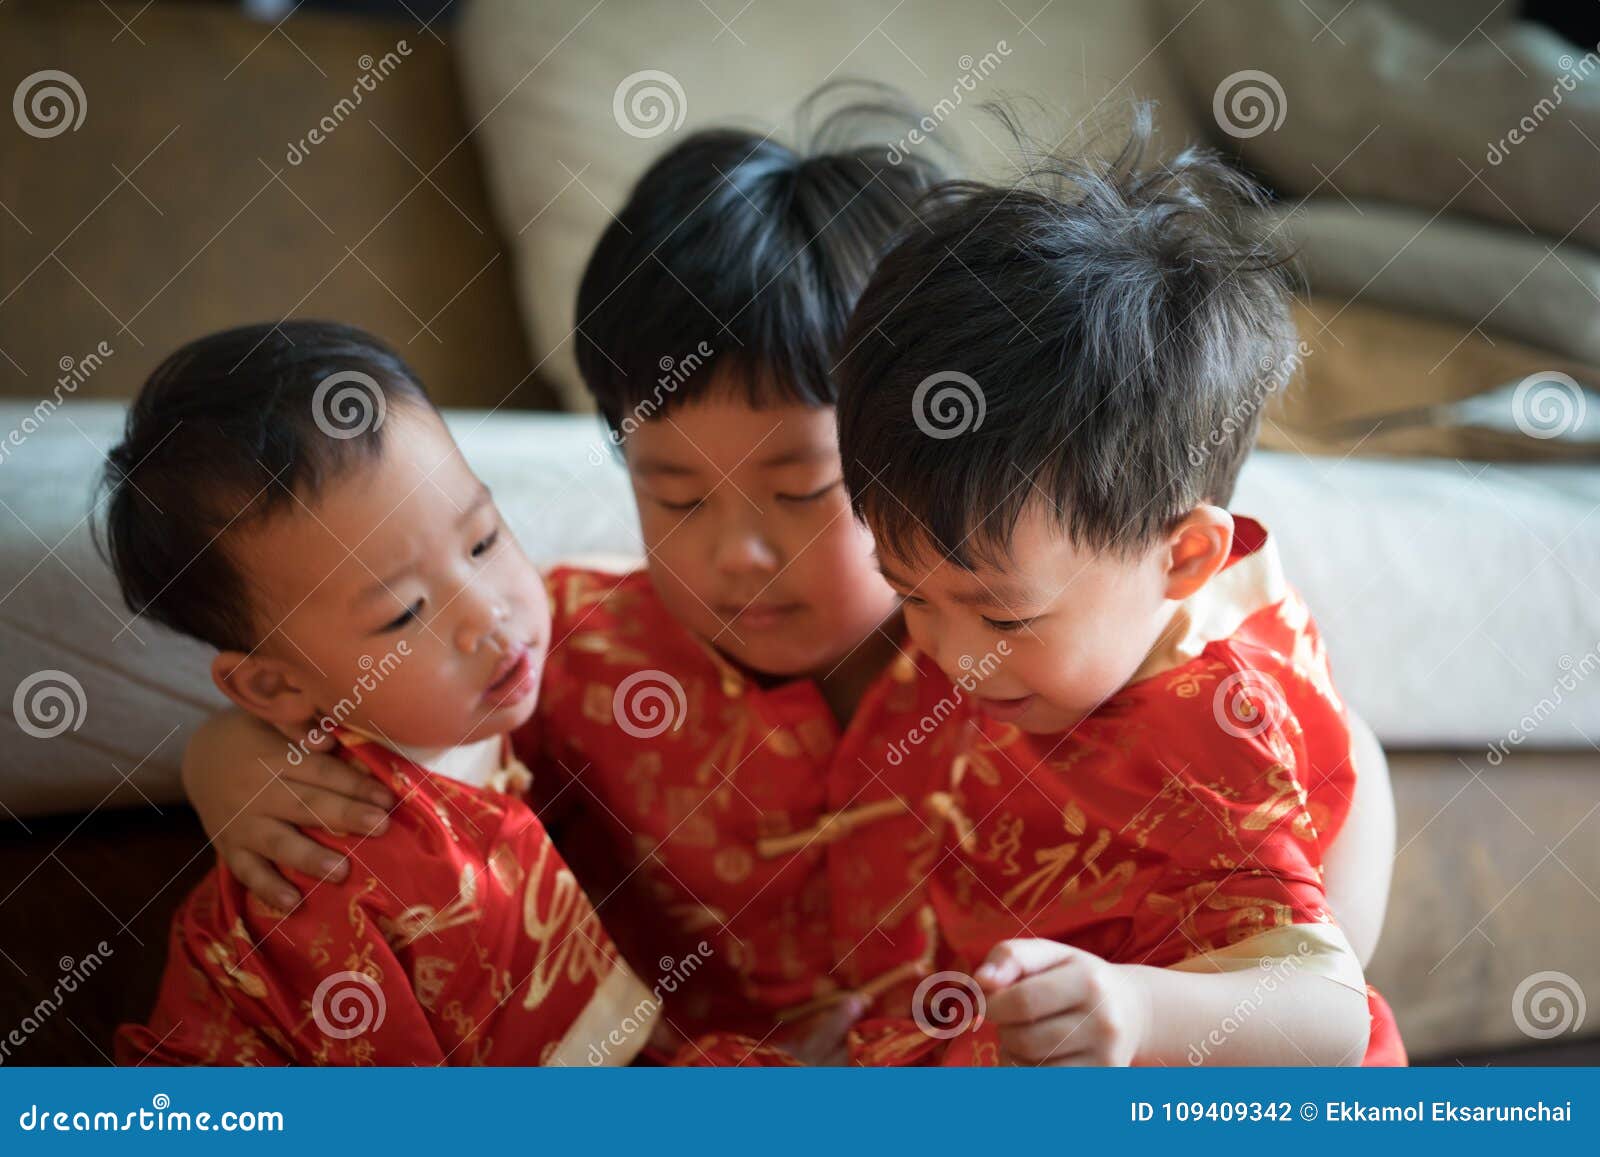 Boys cute chinese 200+ Chinese